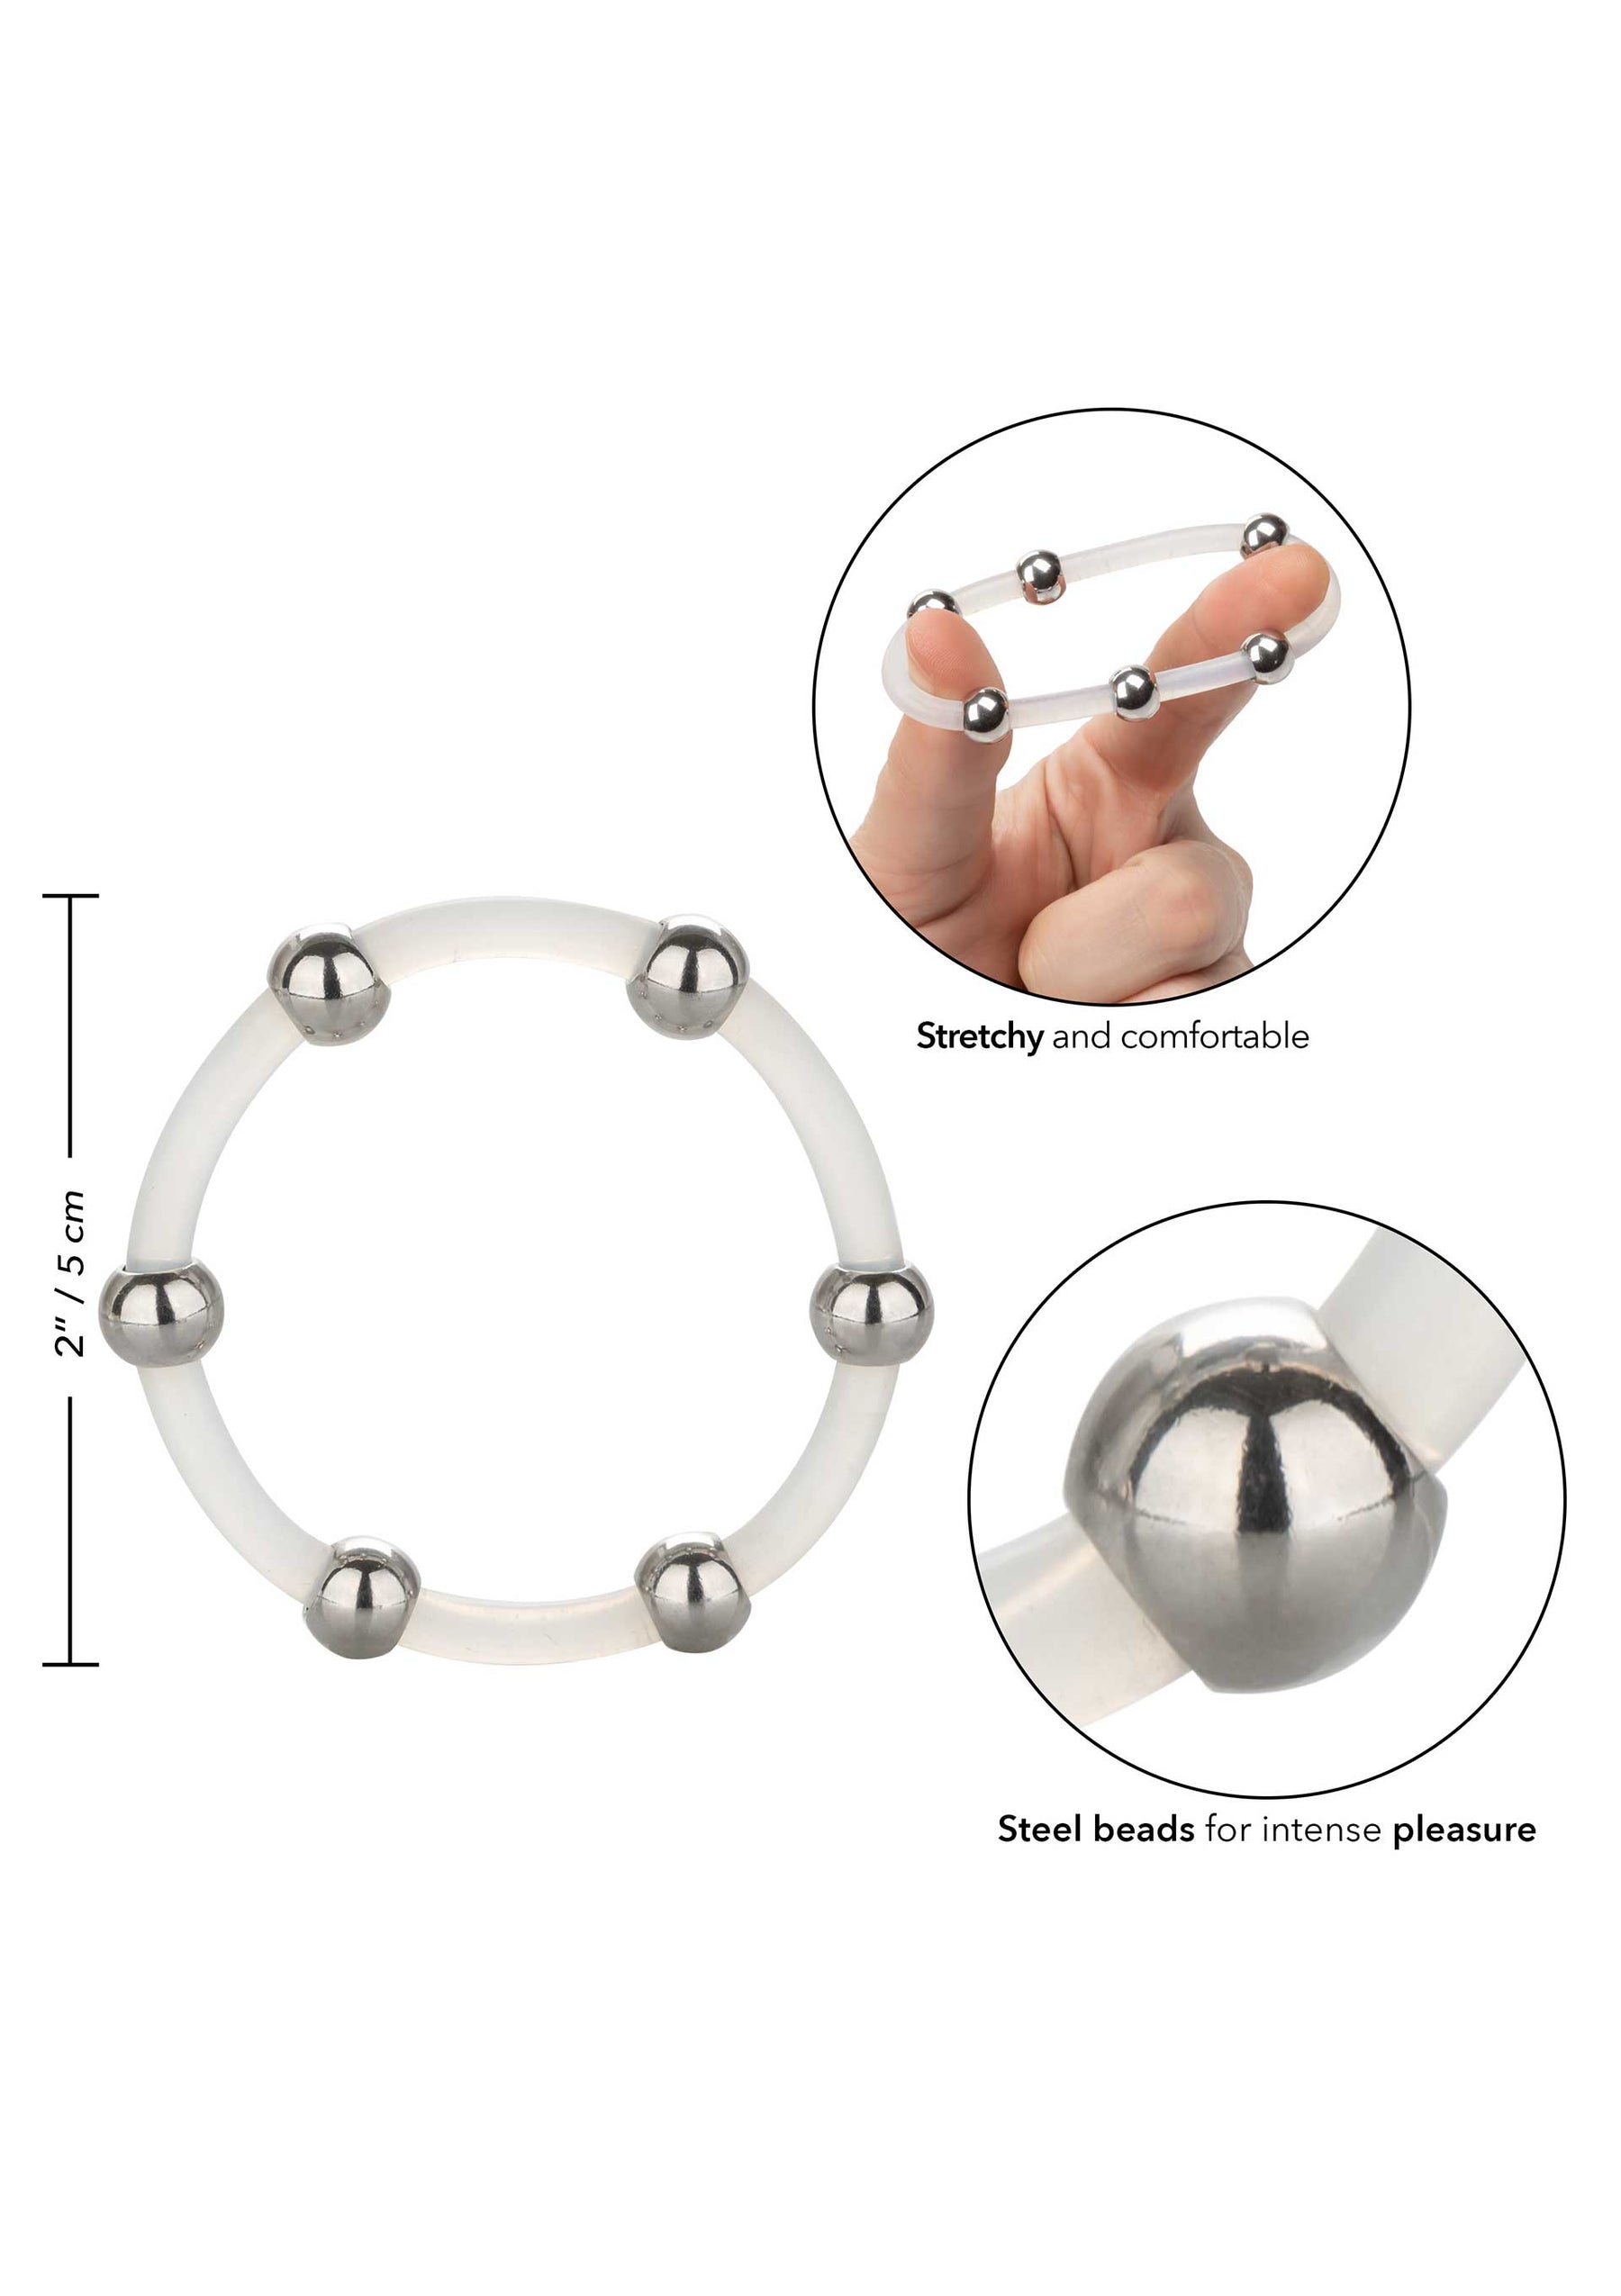 Steel Beaded Silicone Ring XL-erotic-world-munchen.myshopify.com